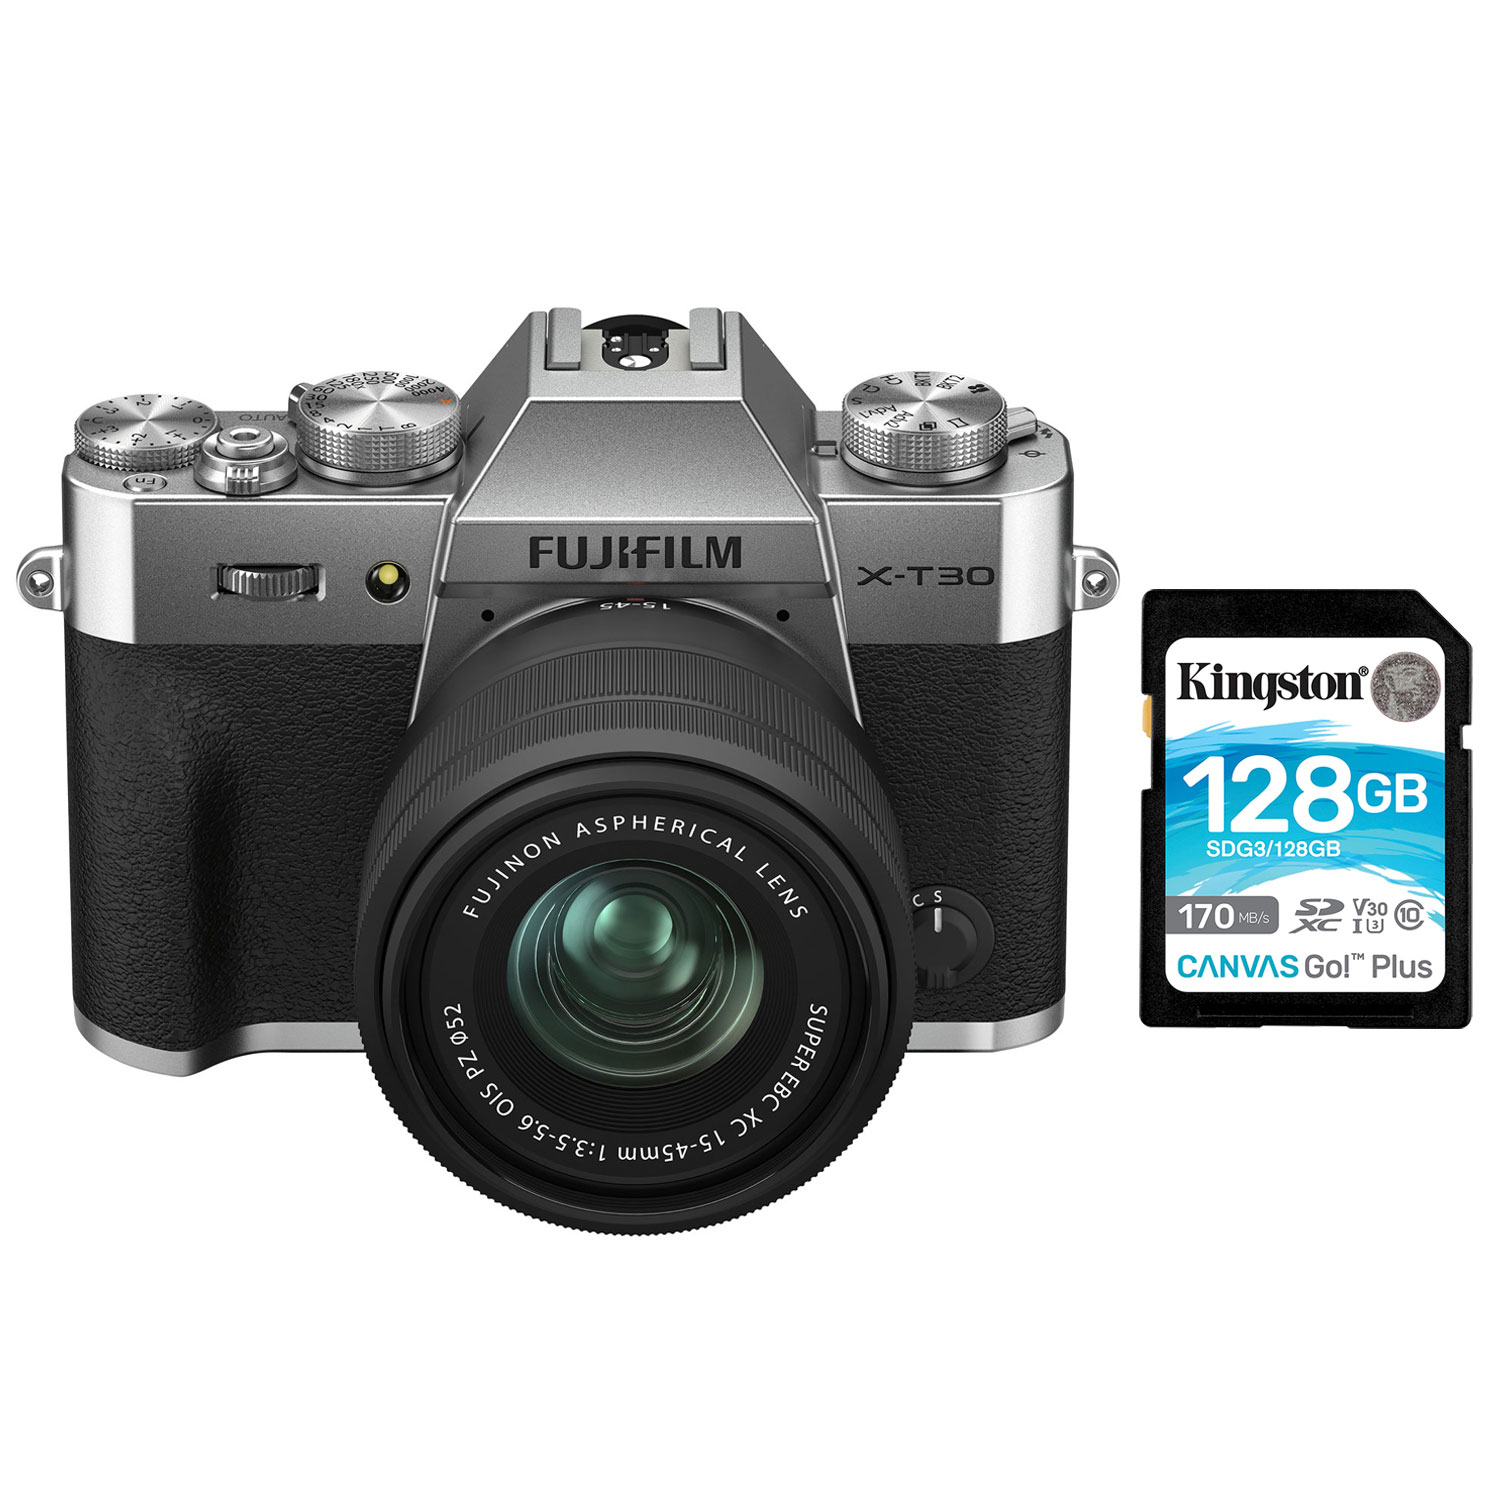 Fujifilm X-T30 II Mirrorless Camera with 15-45mm Lens Kit & 128GB 170MB/s SDXC Memory Card - Silver